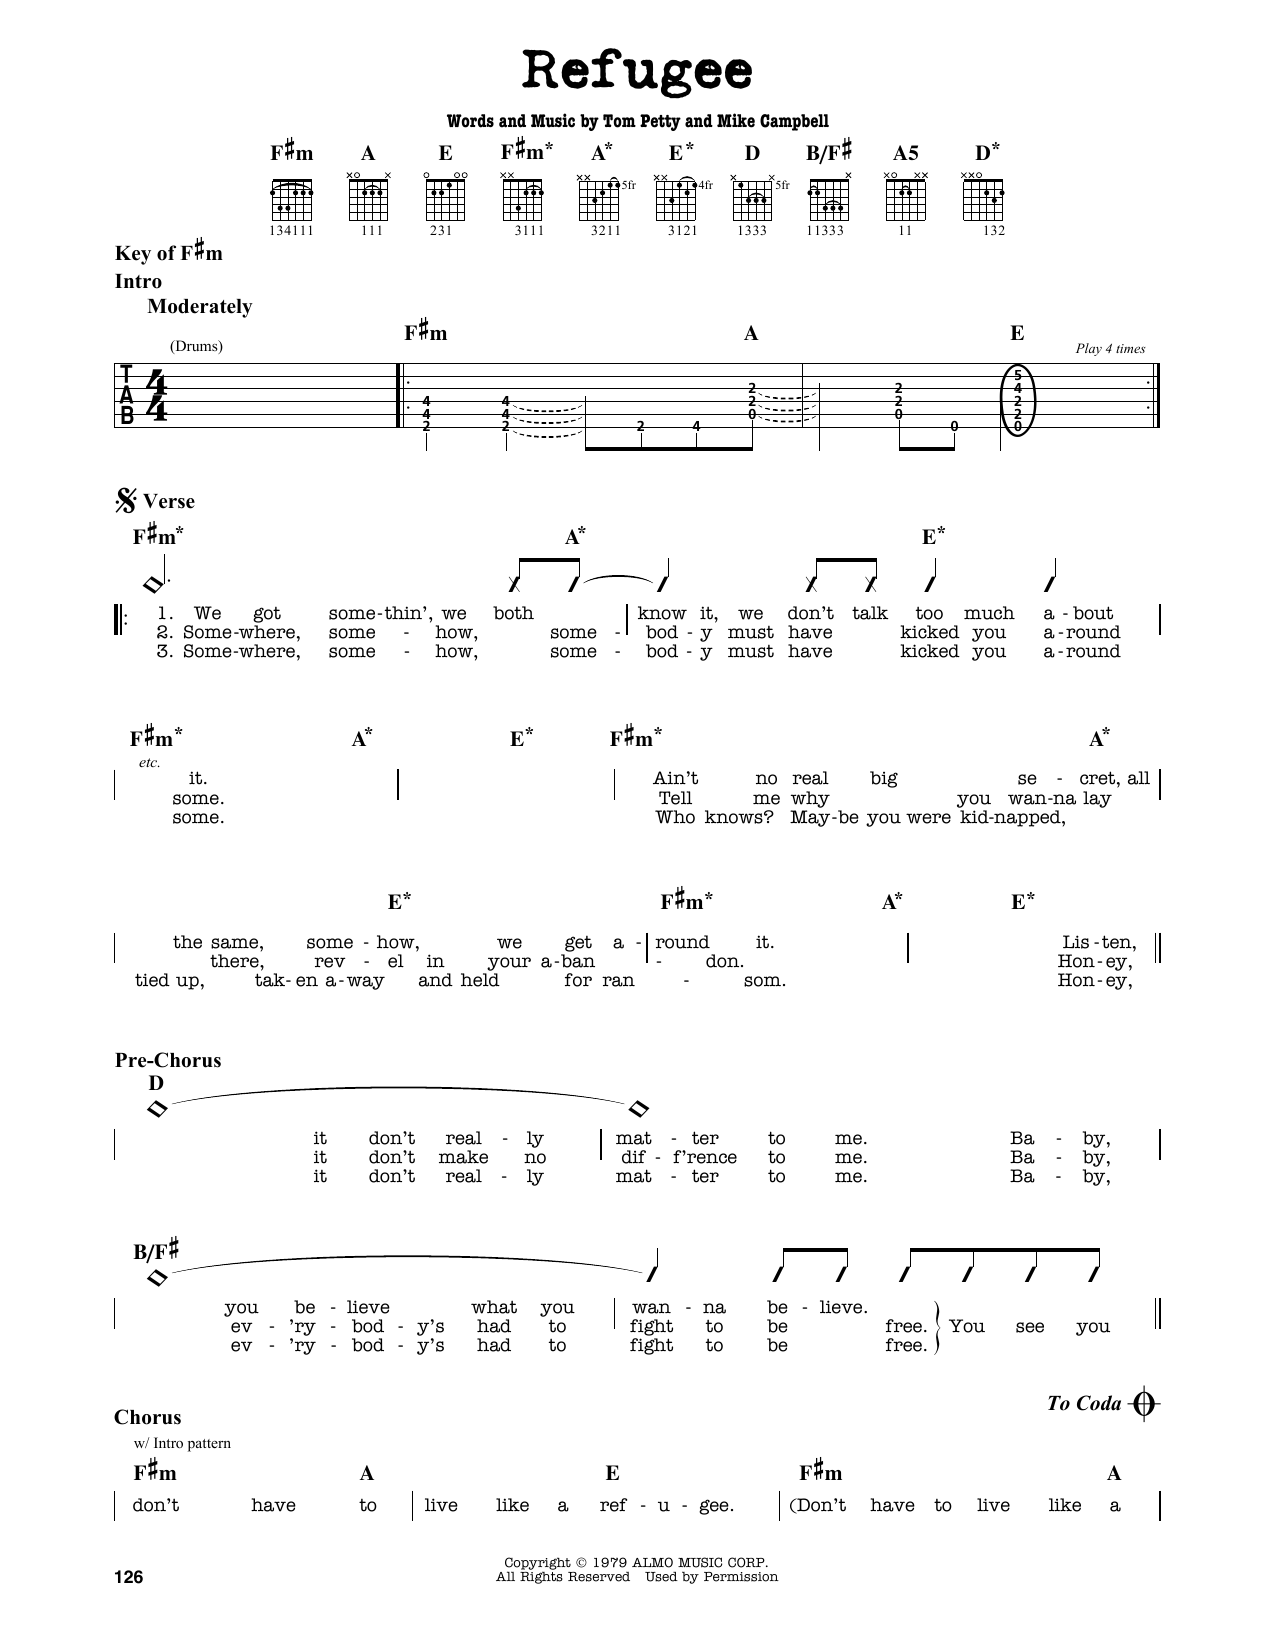 Tom Petty Refugee Sheet Music Notes & Chords for Ukulele - Download or Print PDF